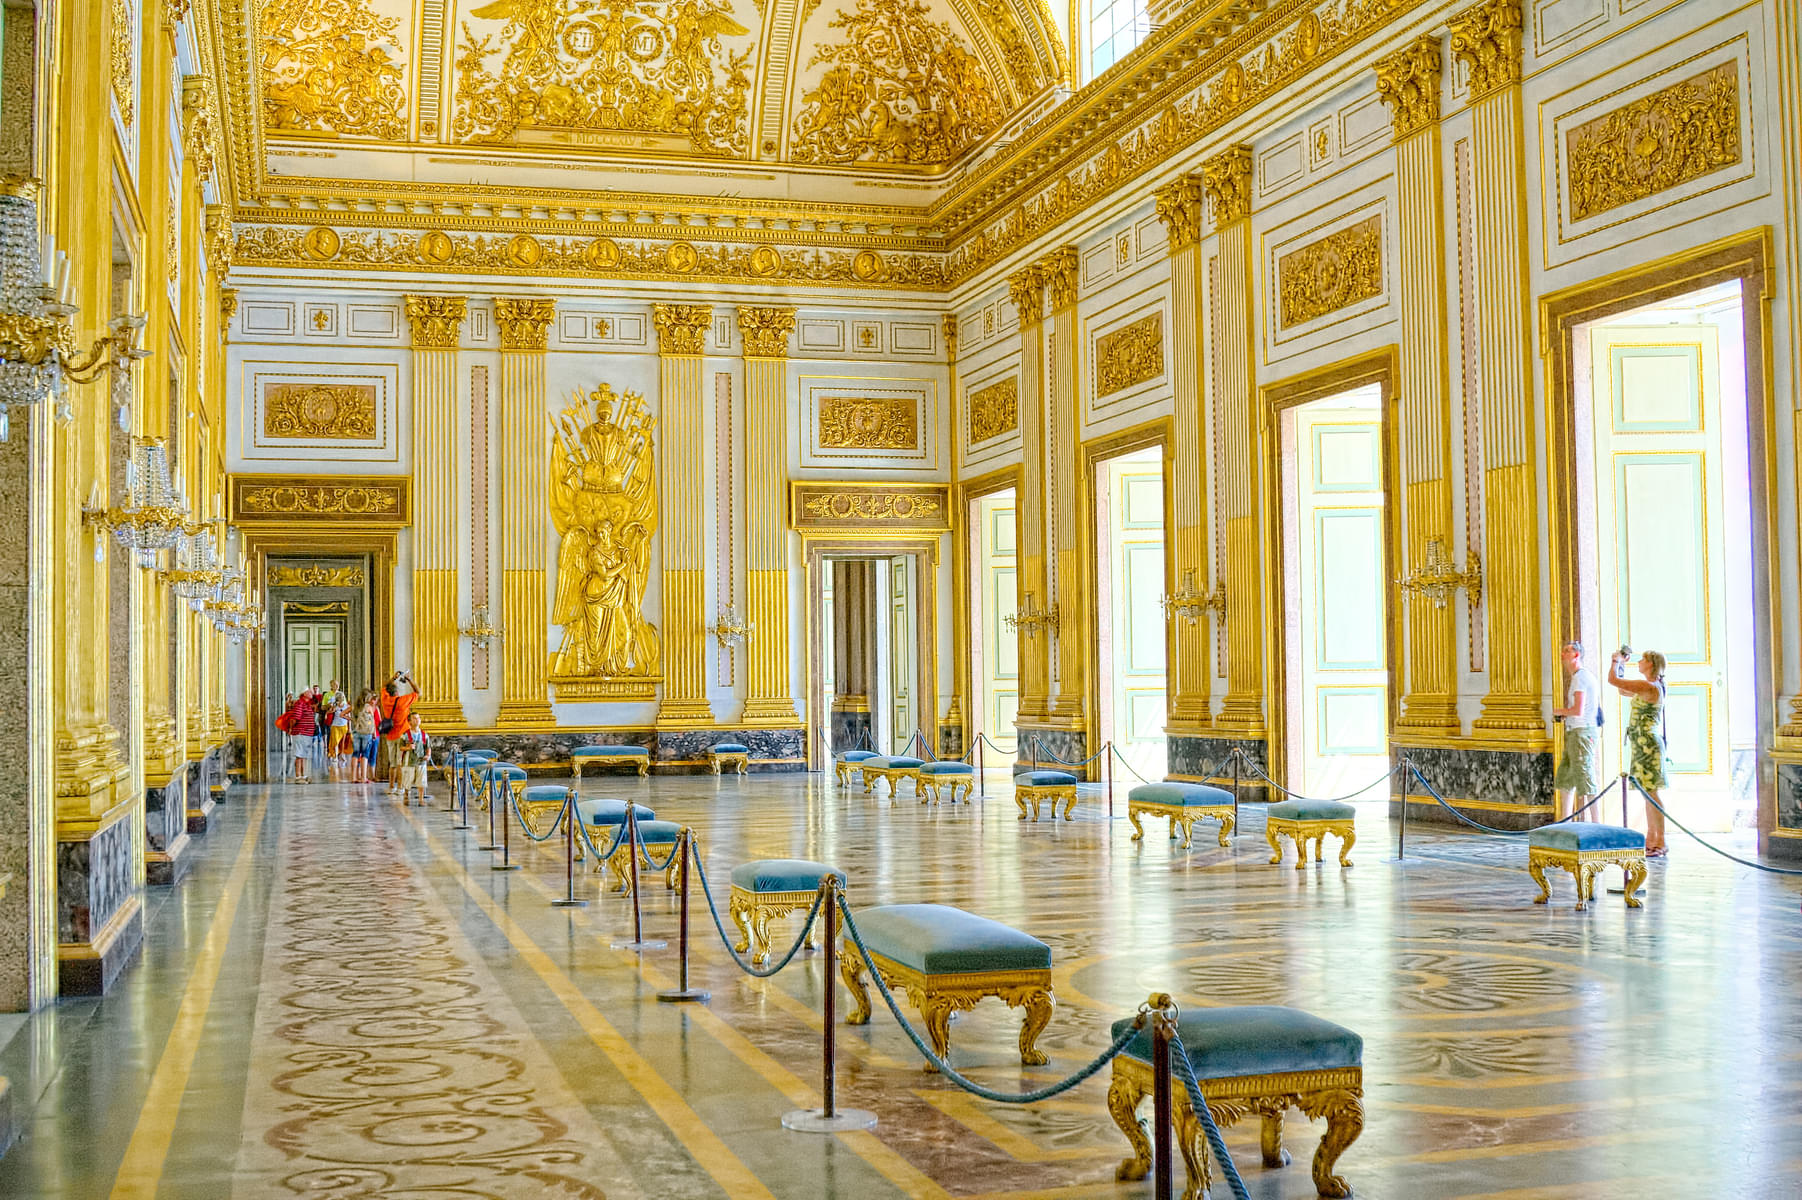 History of The Royal Palace Caserta